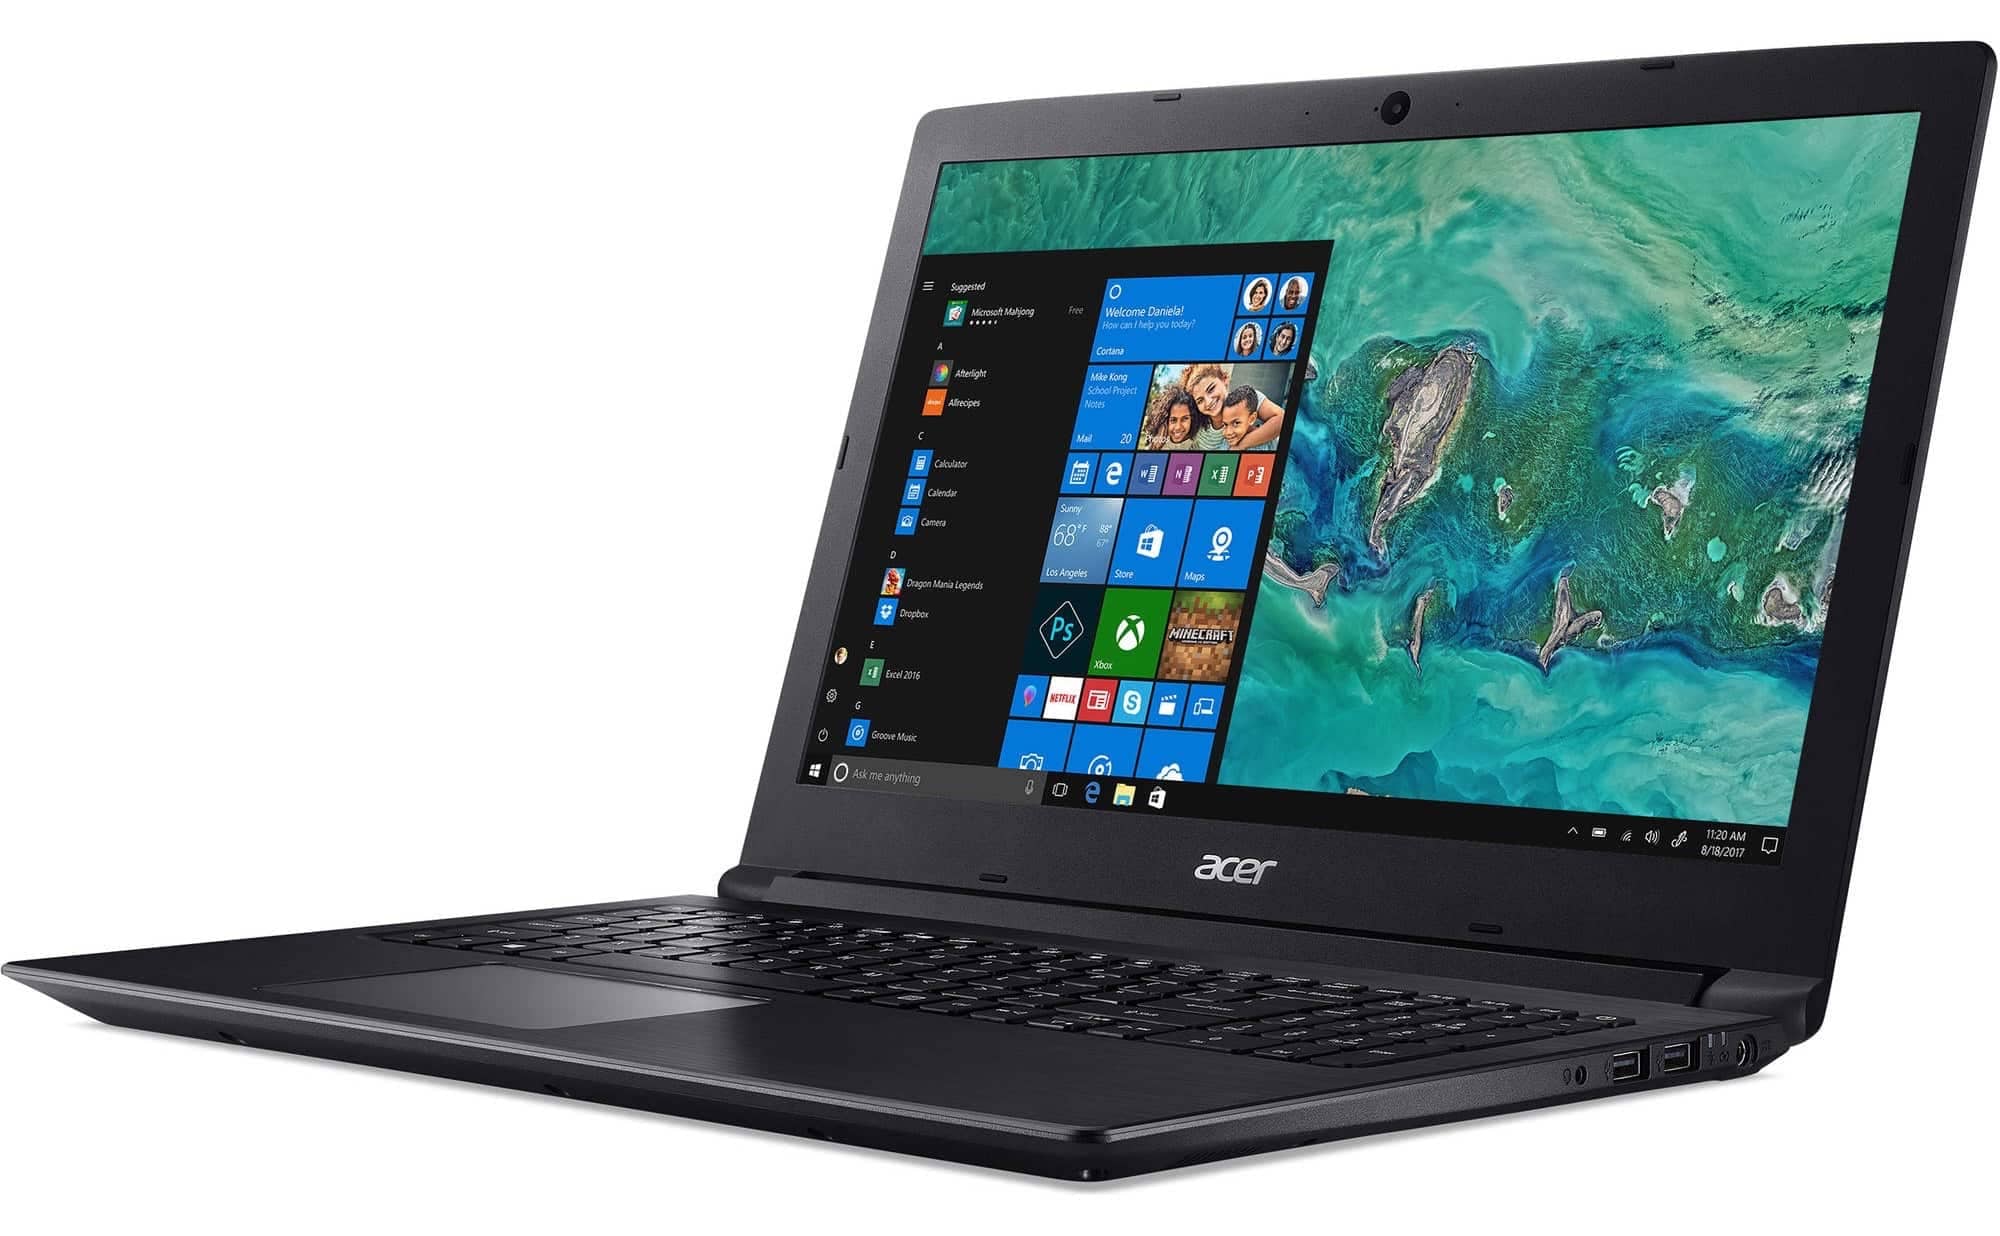 Acer Aspire 3 Series $400 Laptop